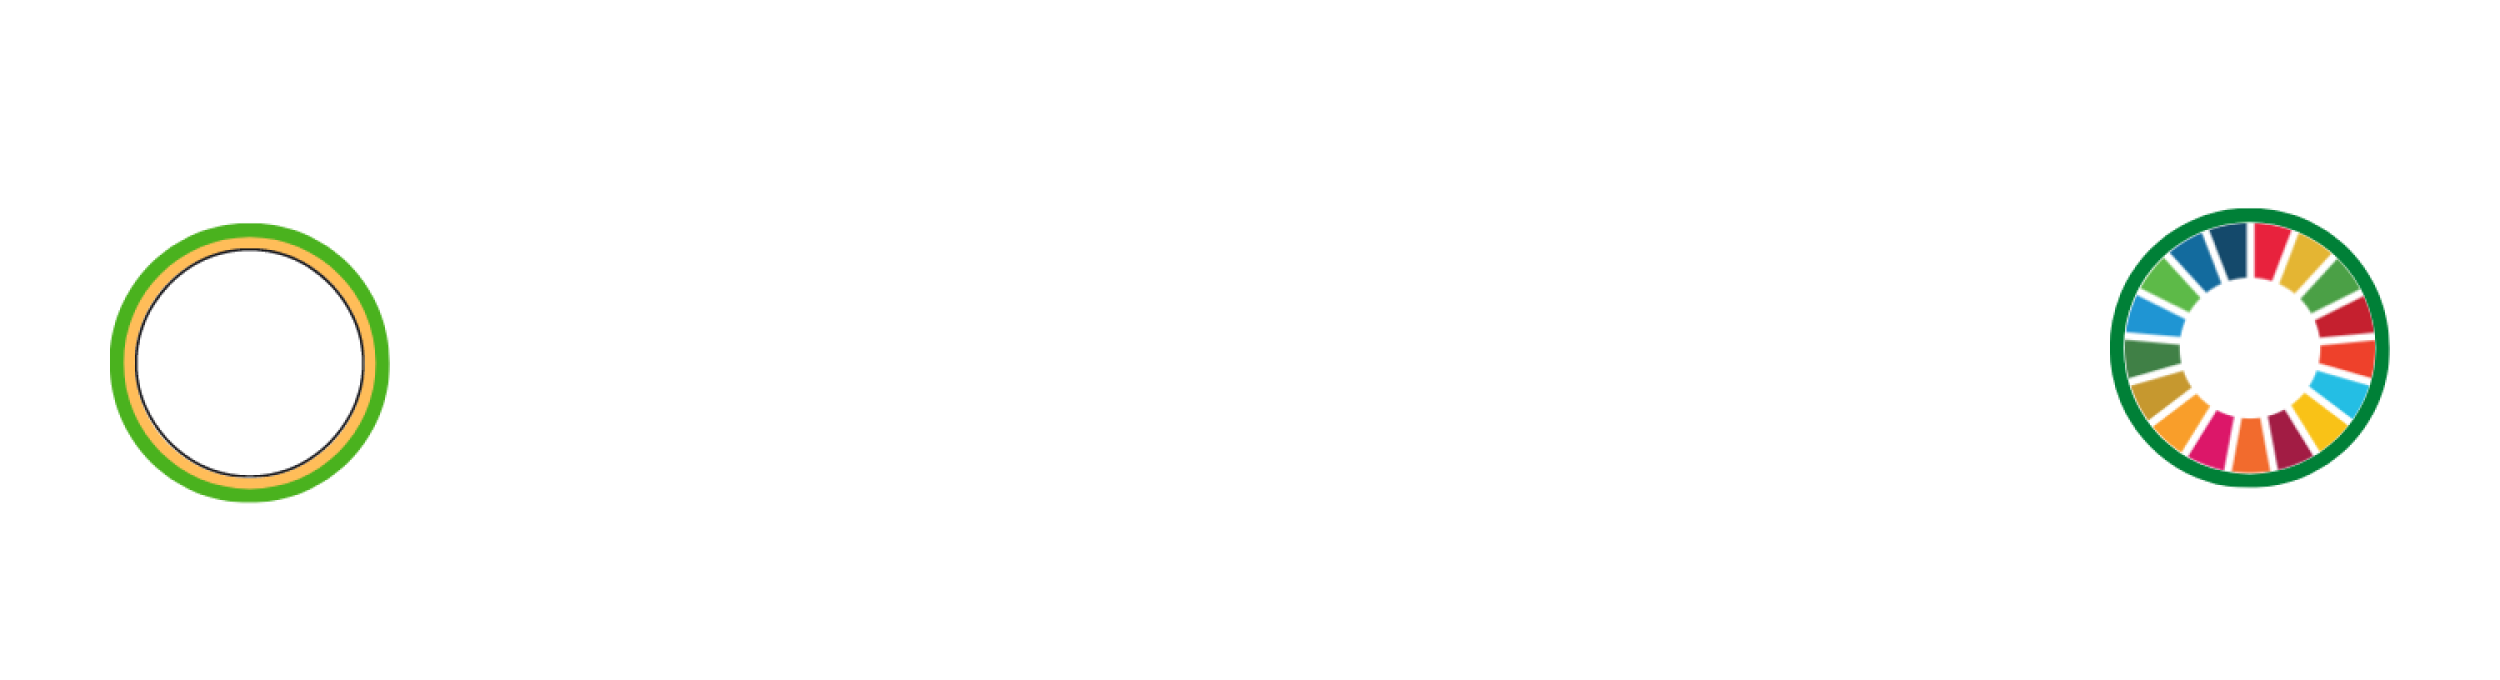 Sustainable ADA logo